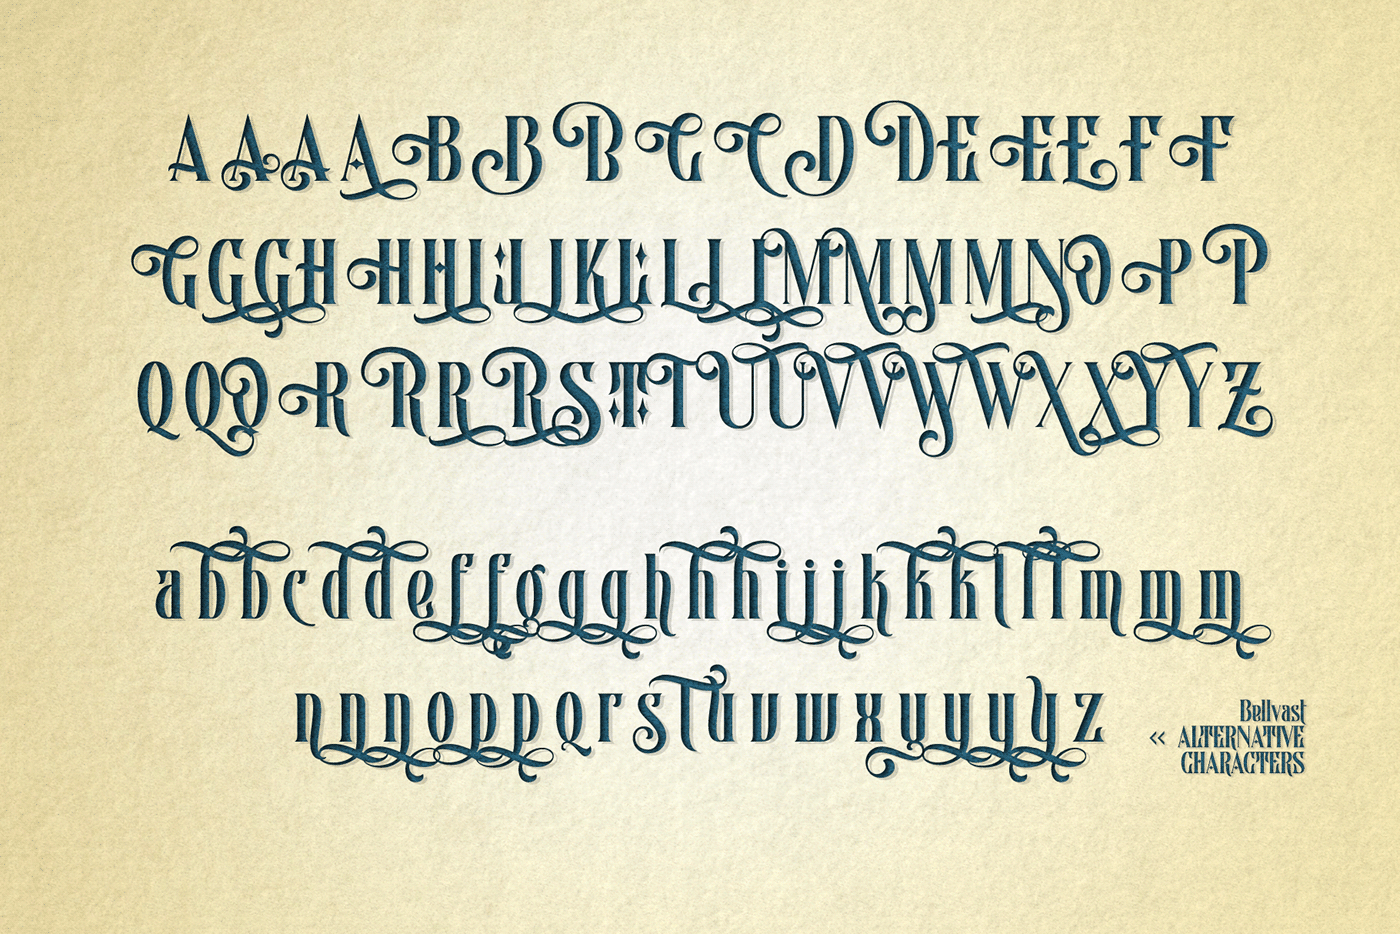 Display elegantfont font logofont serif Typeface vintage vintagefont vintagetypeface